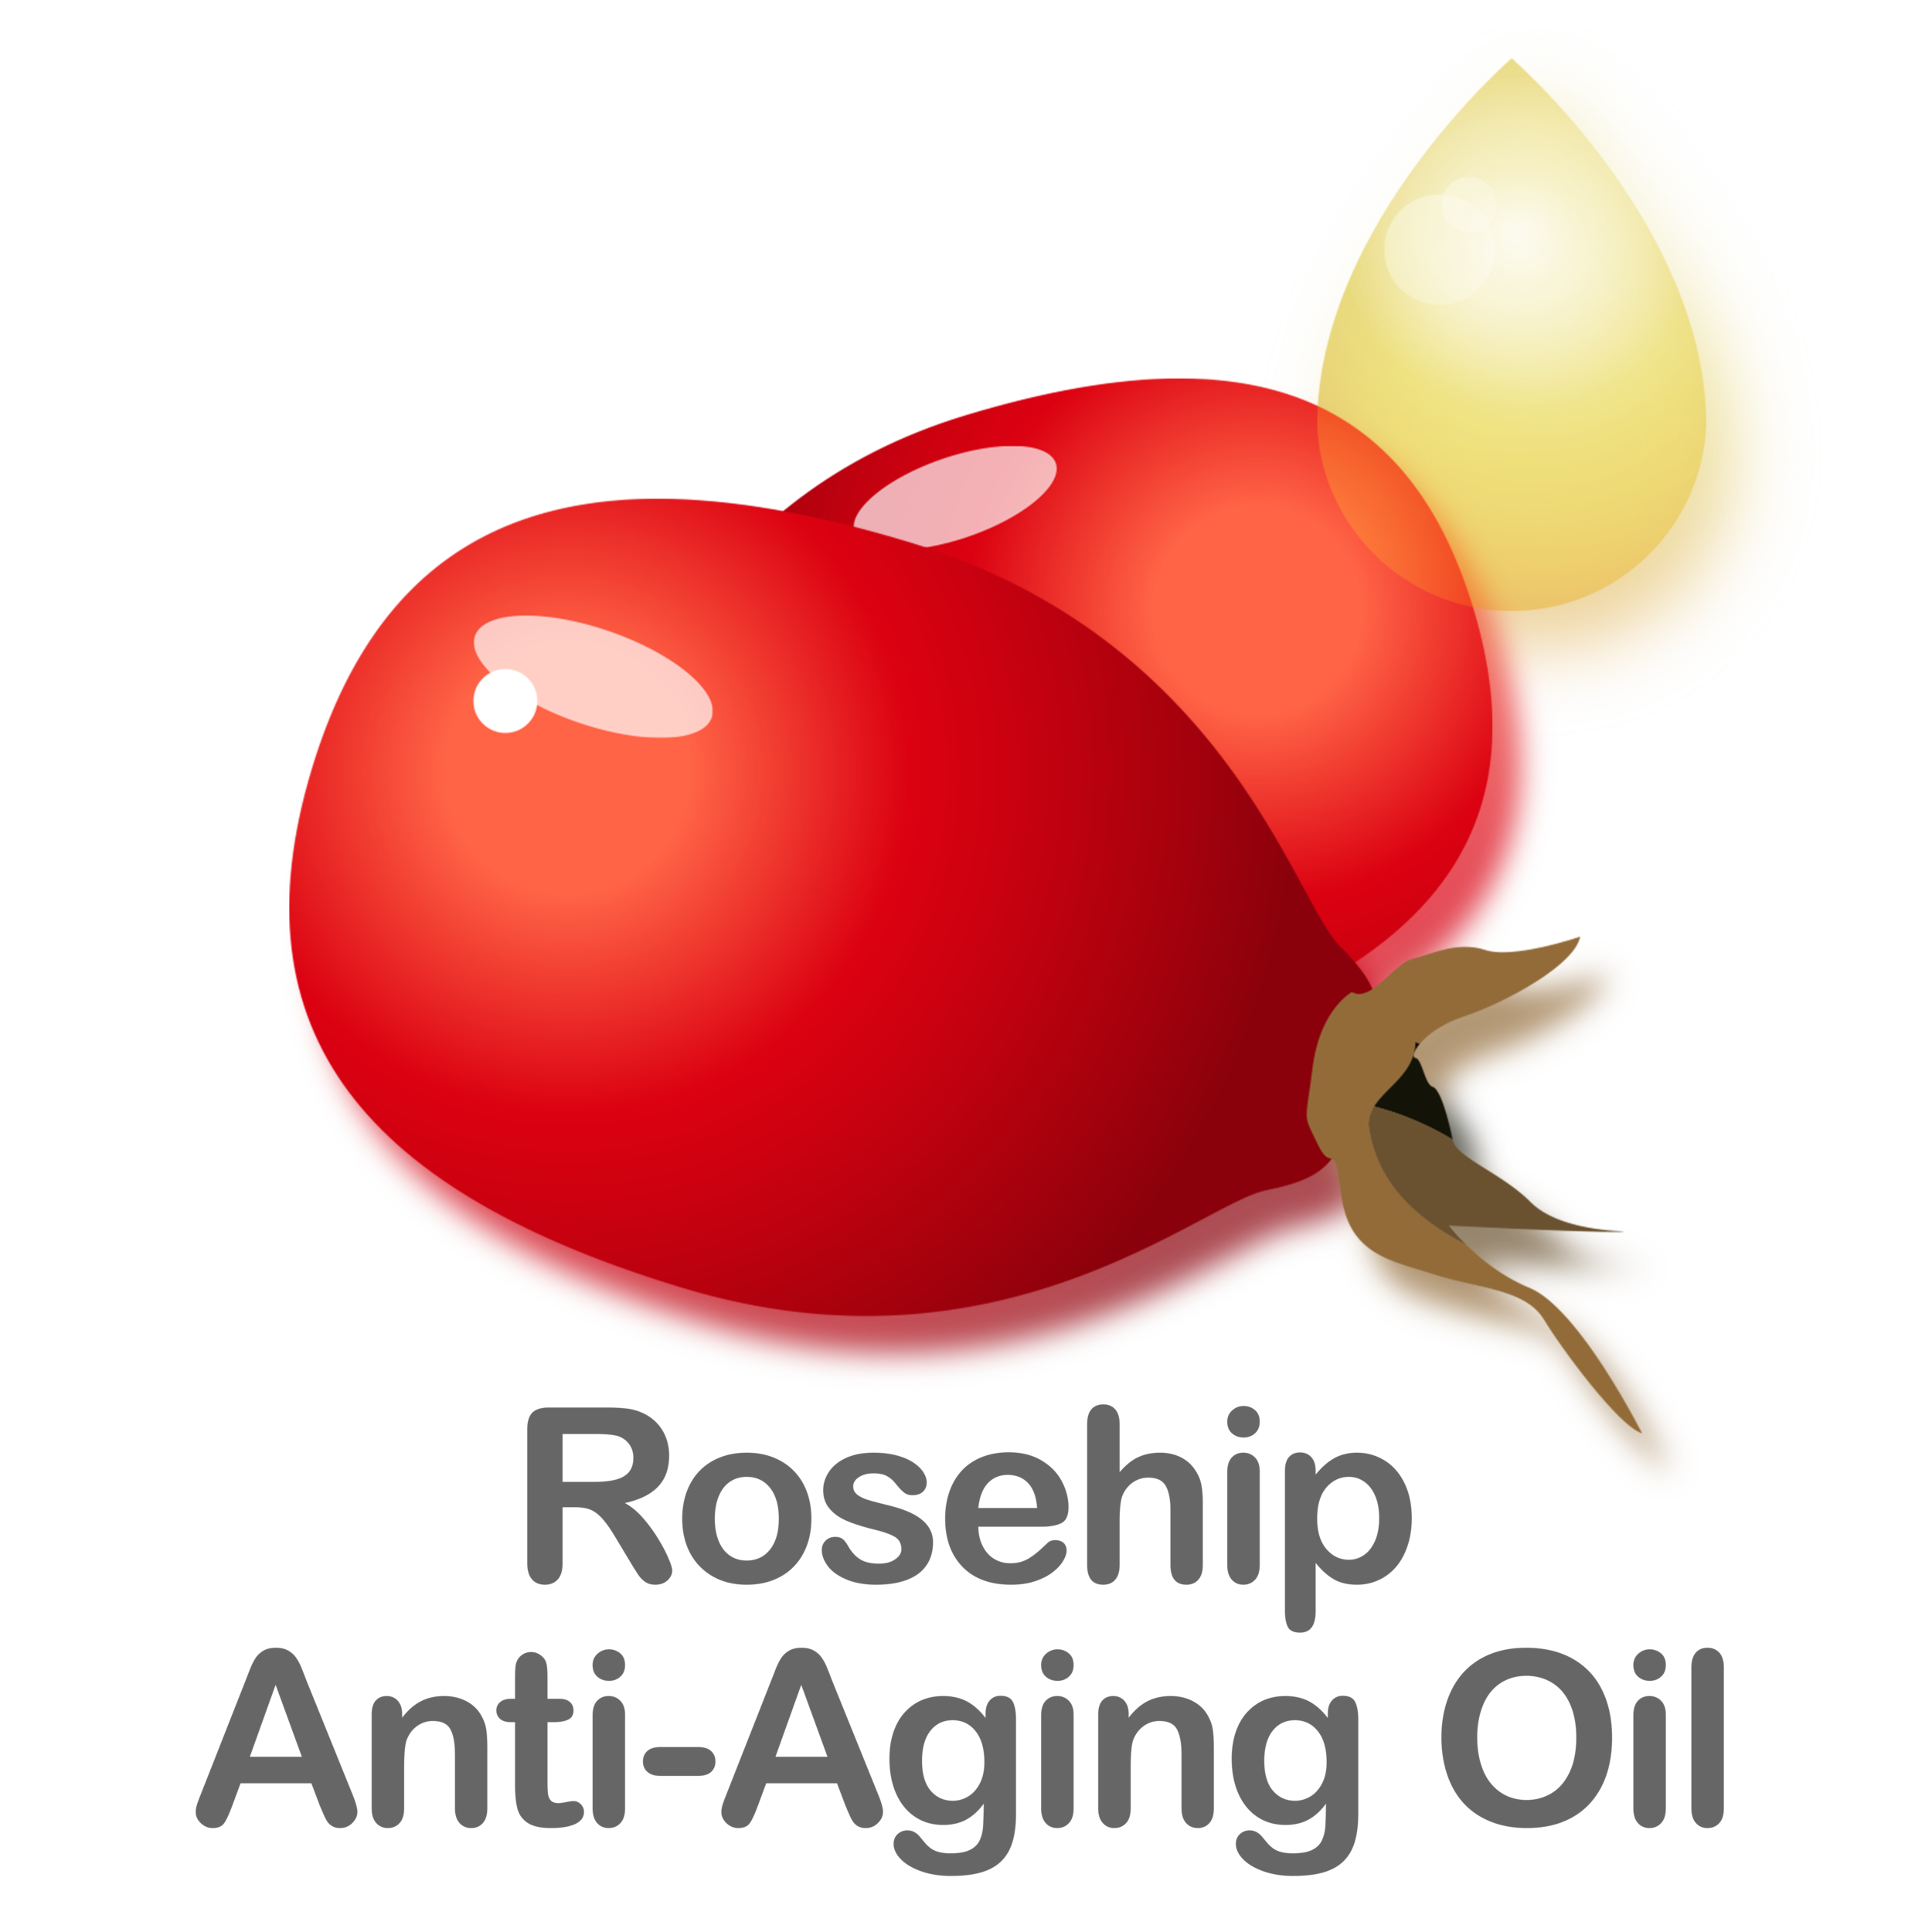 Rosehip Anti-Aging Oil (Copy)